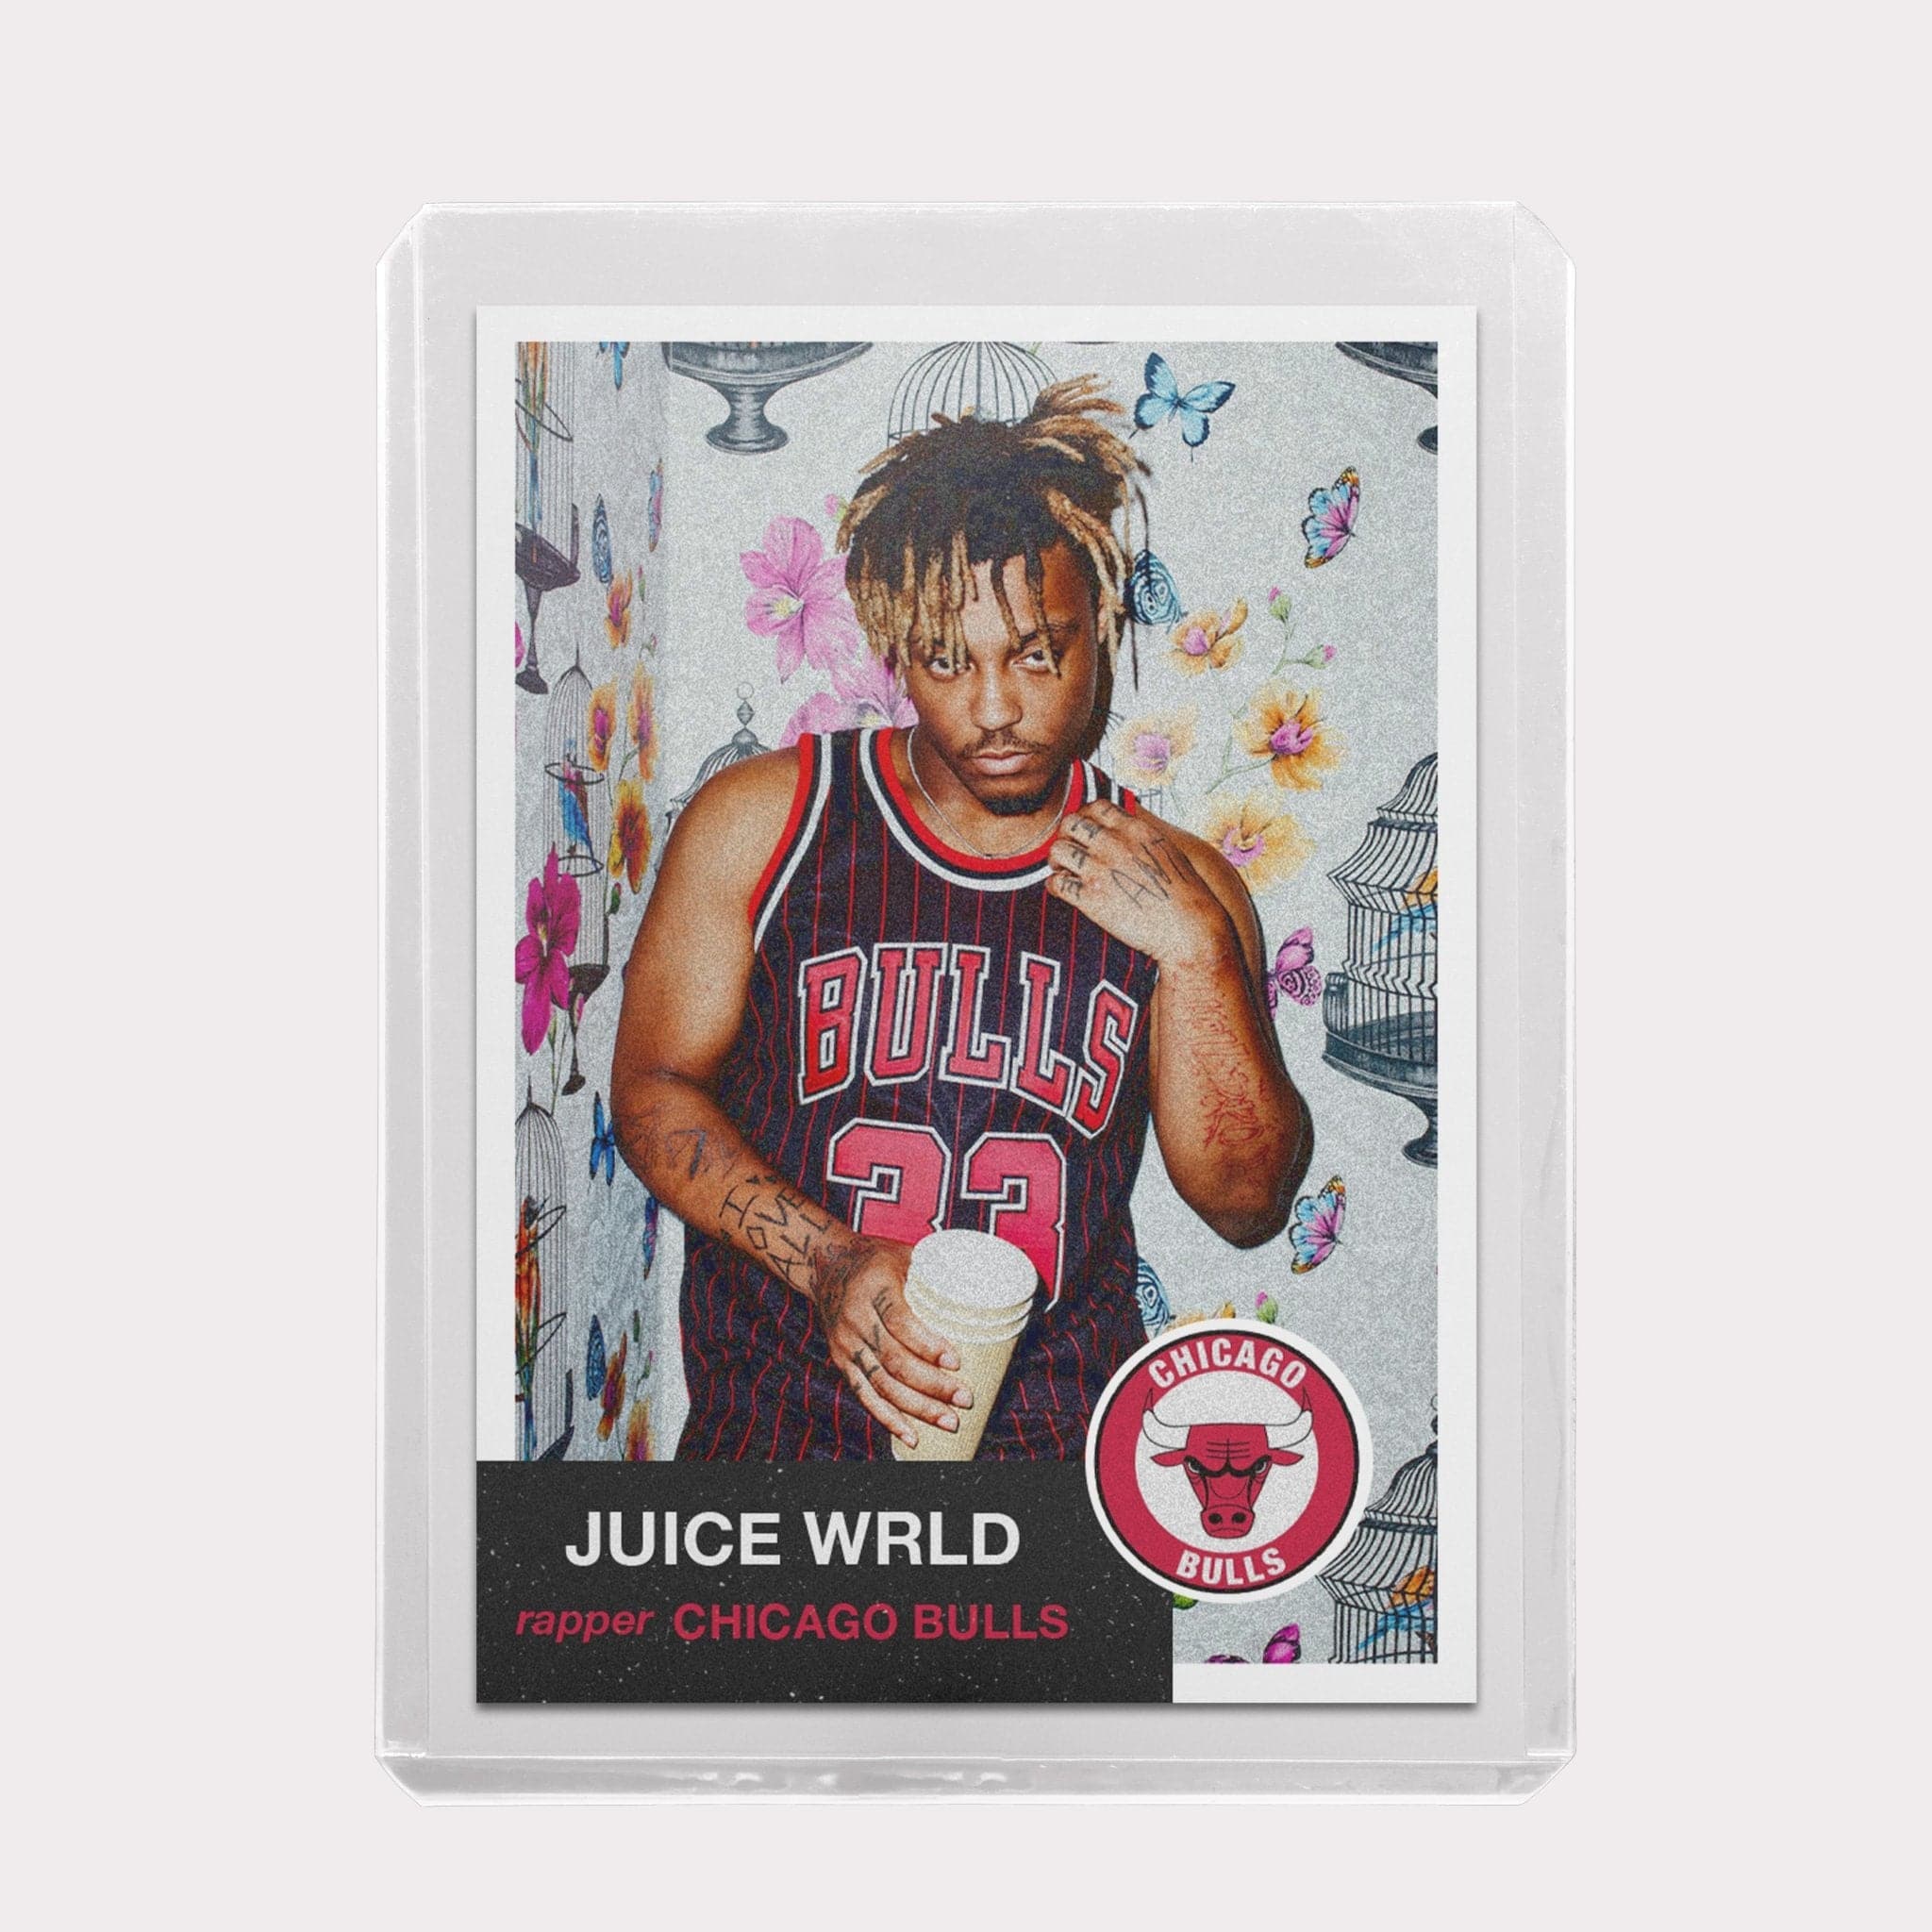 Juice WRLD Custom Basketball Card